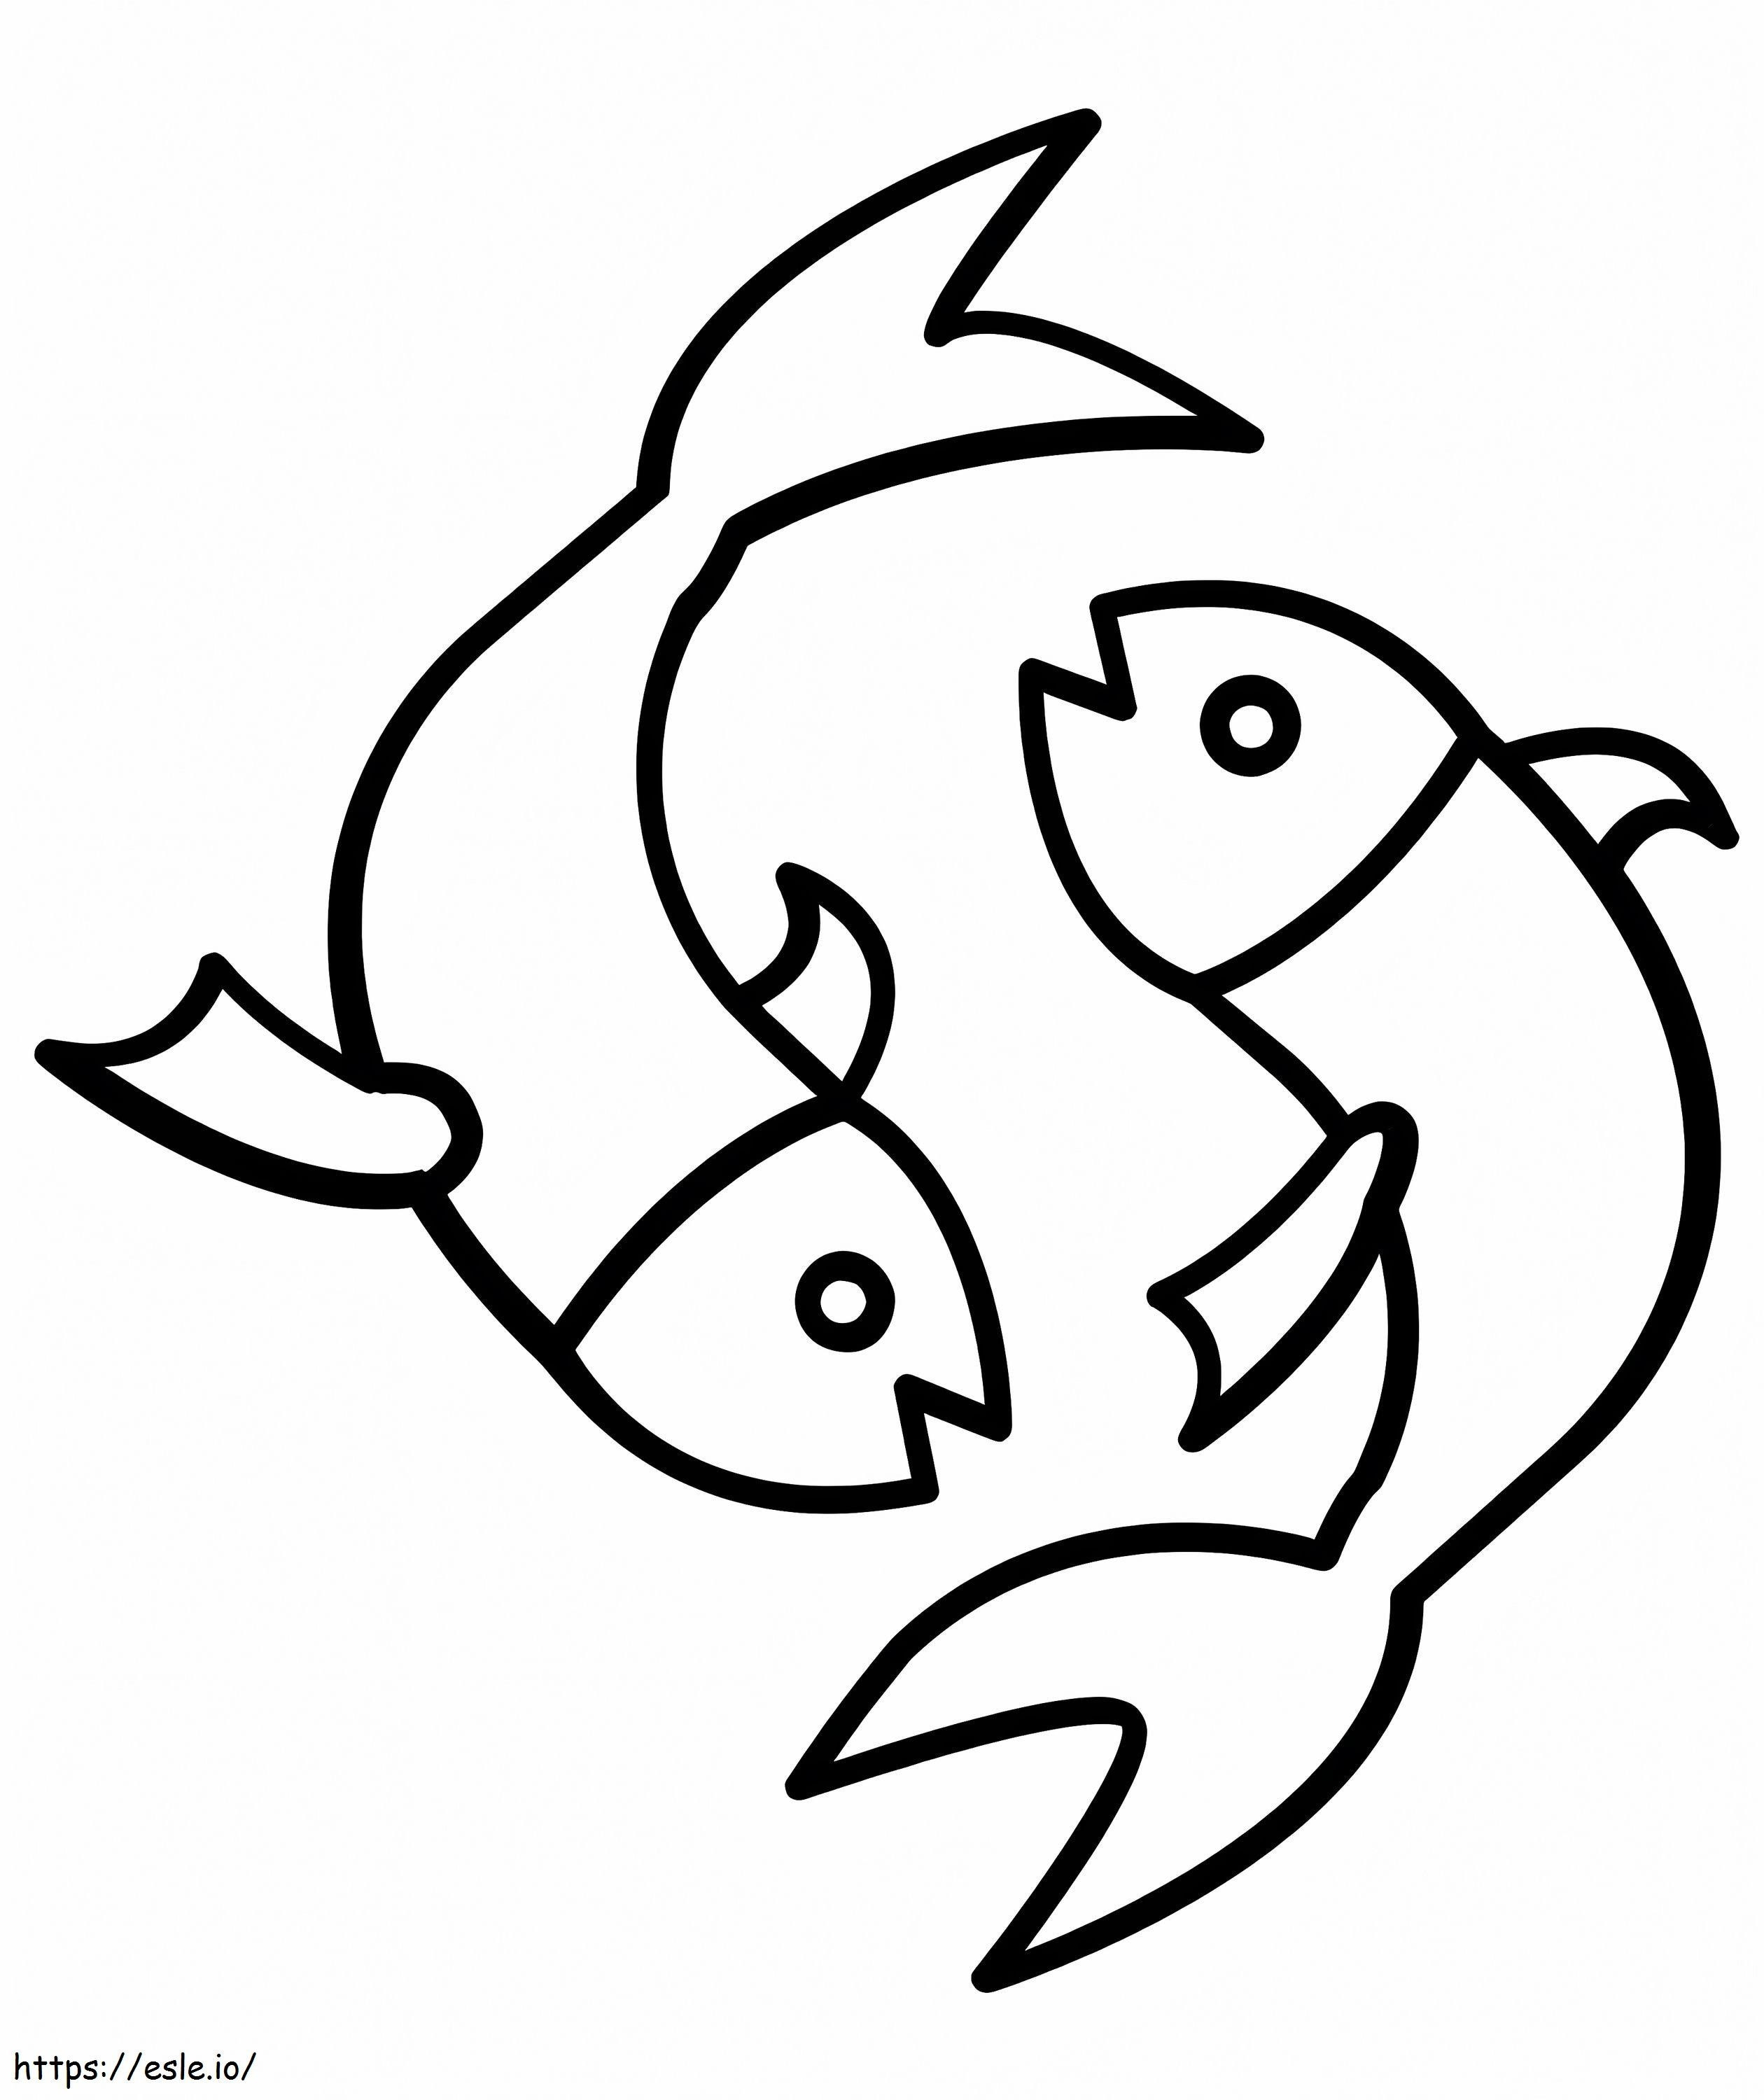 Helppo kalasymboli värityskuva